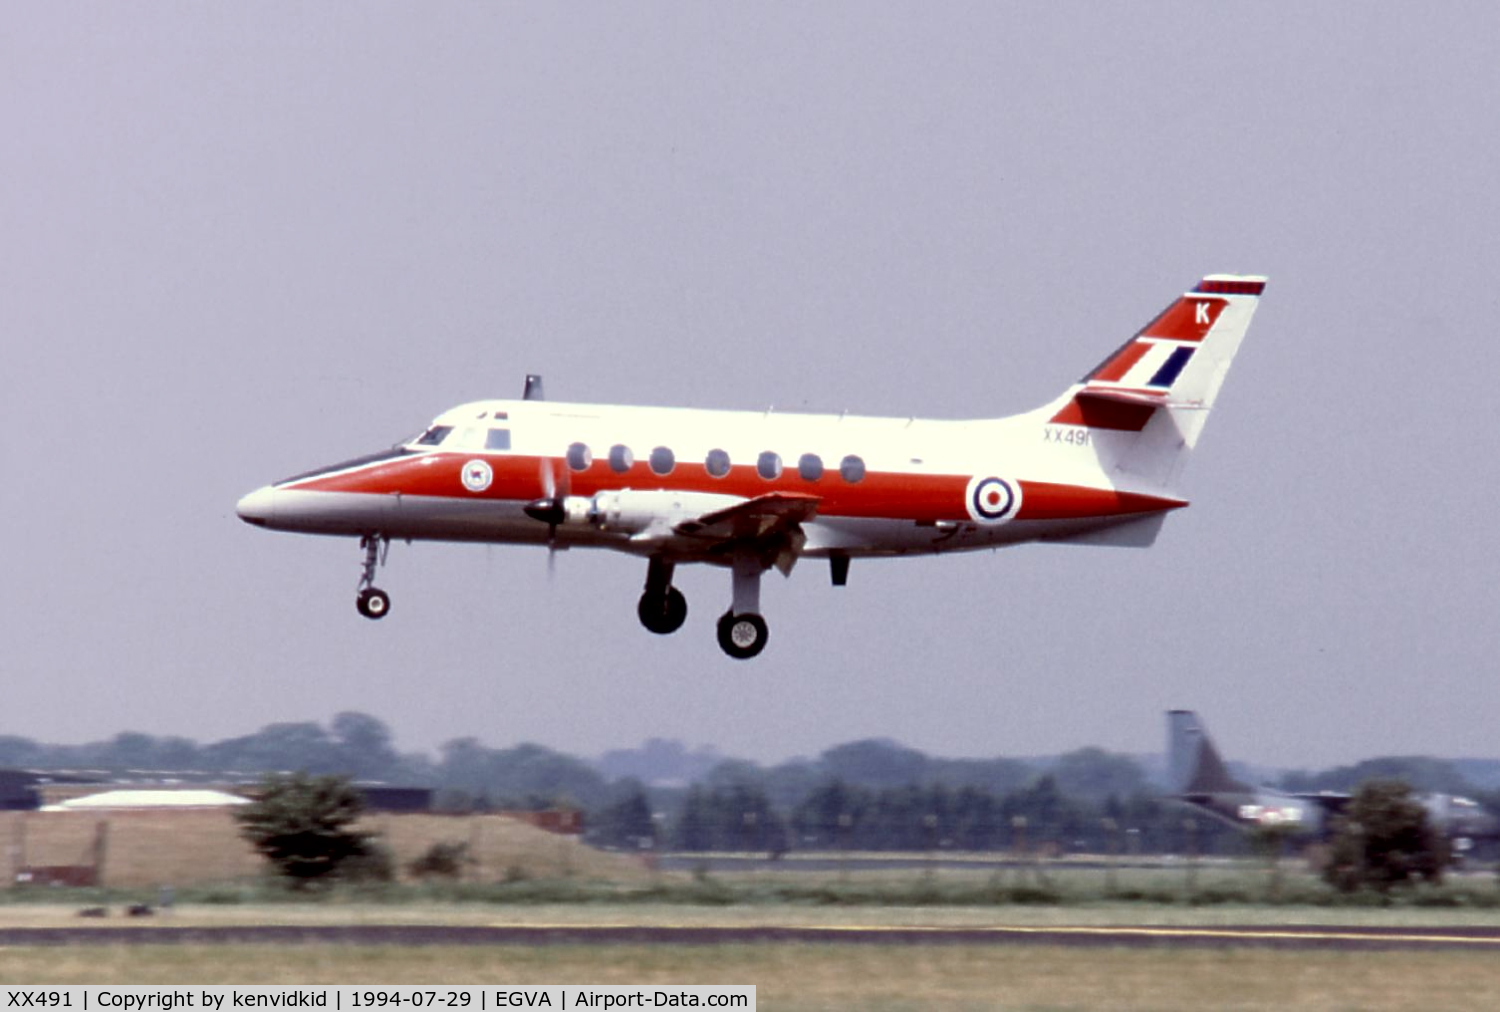 XX491, Scottish Aviation HP-137 Jetstream T.1 C/N 275, Royal Air Force arriving at RIAT.